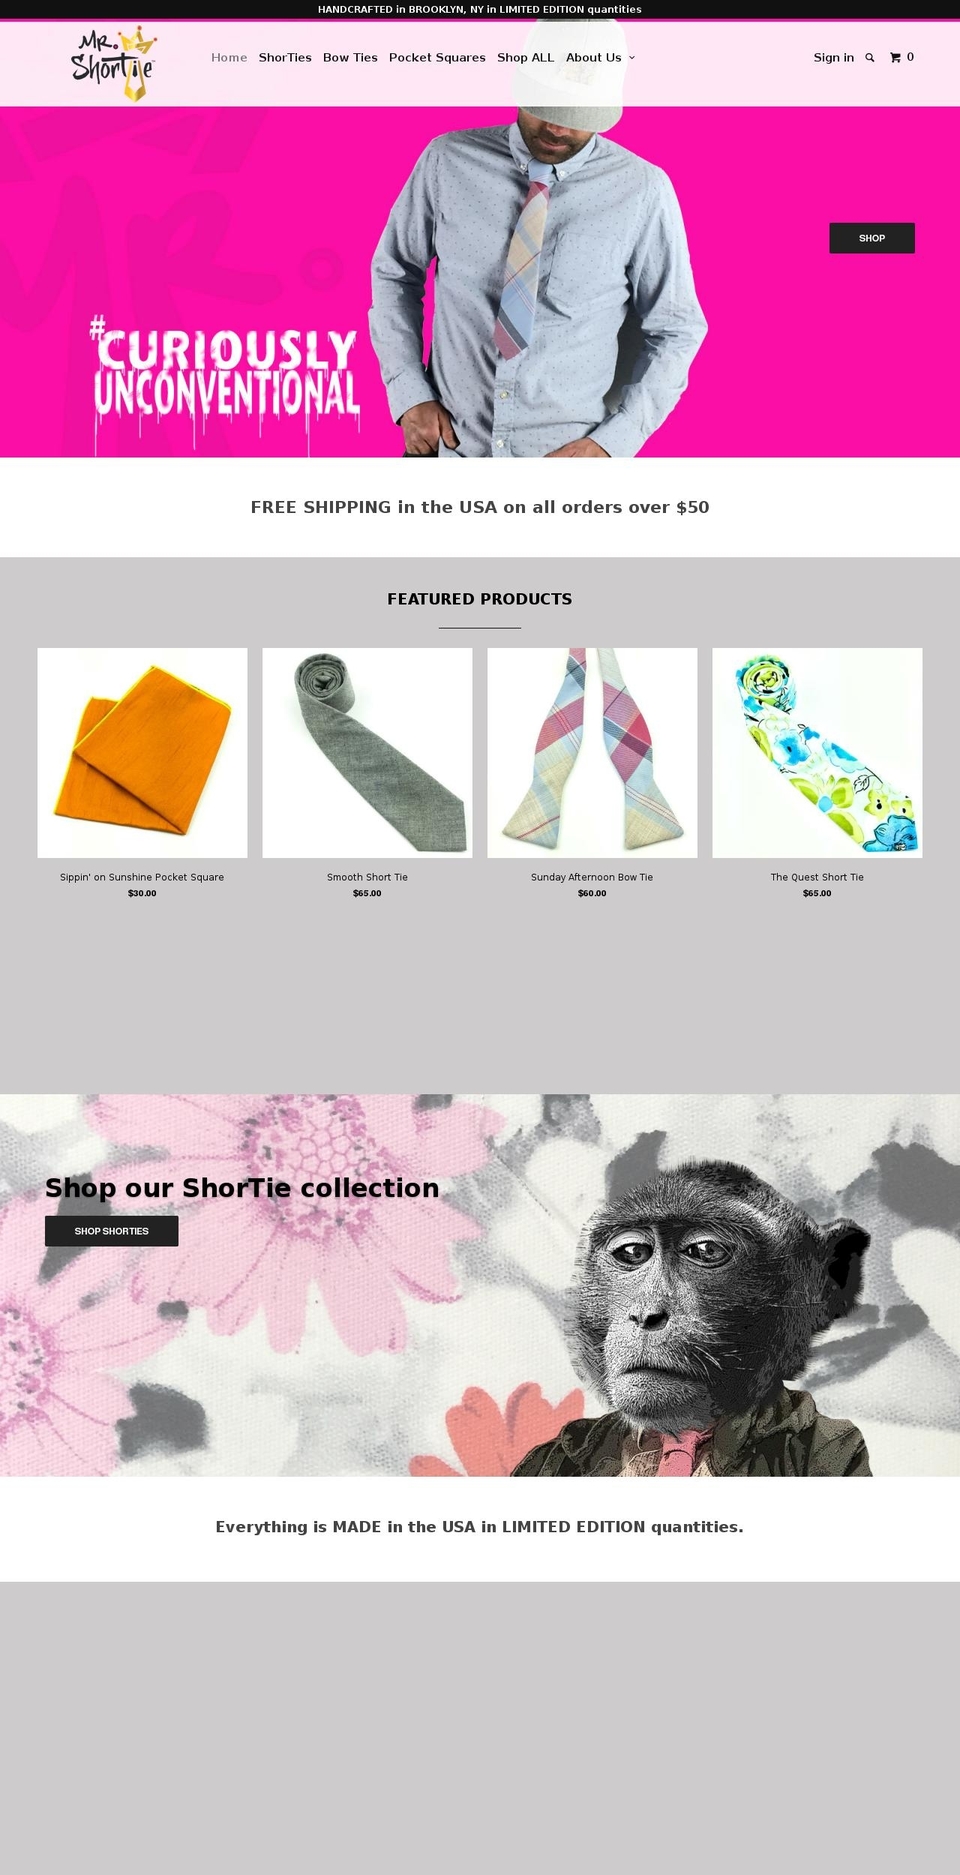 November Shopify theme site example mrshortie.com